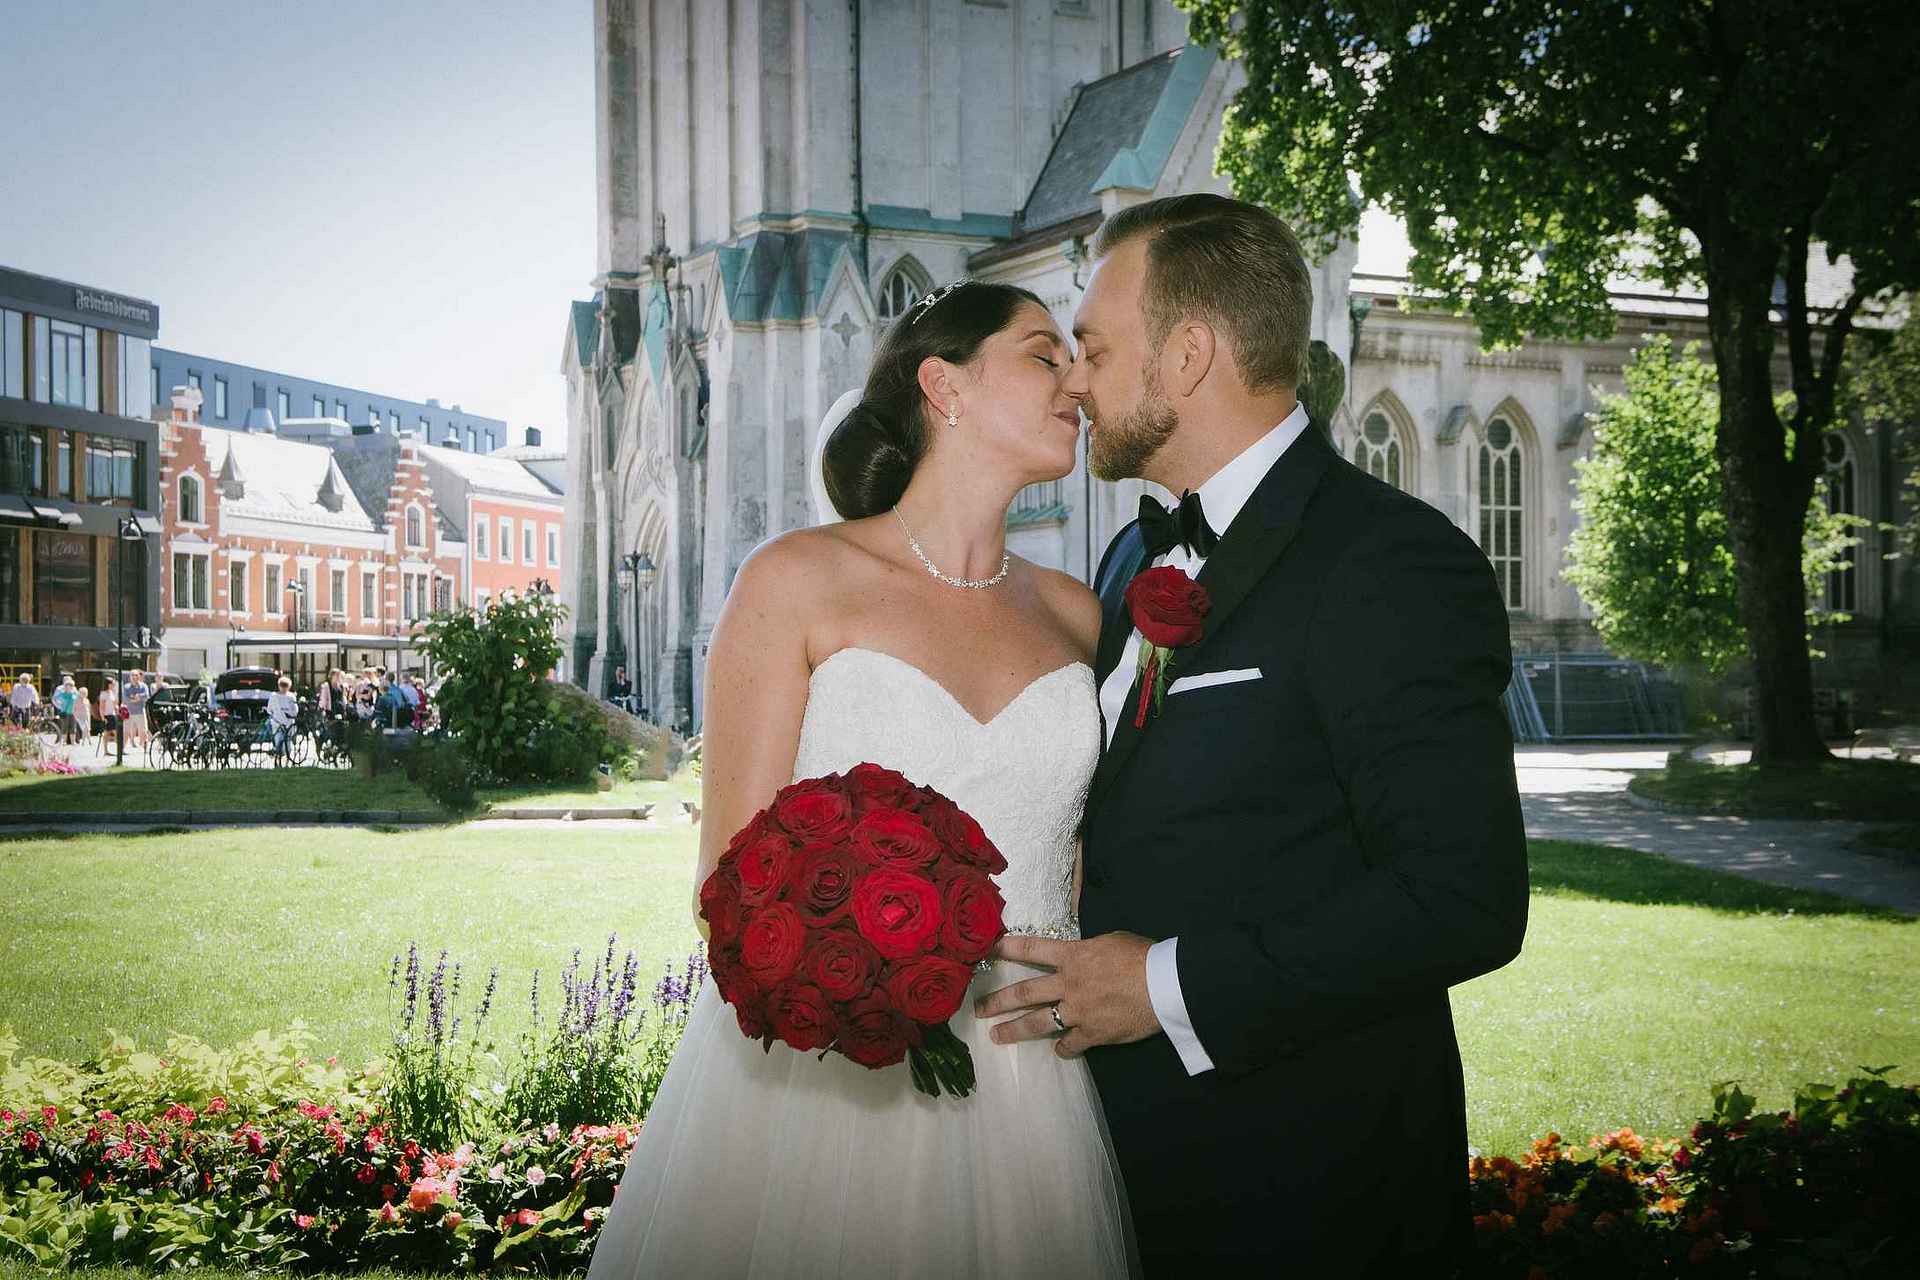 Wedding photographer in Norway